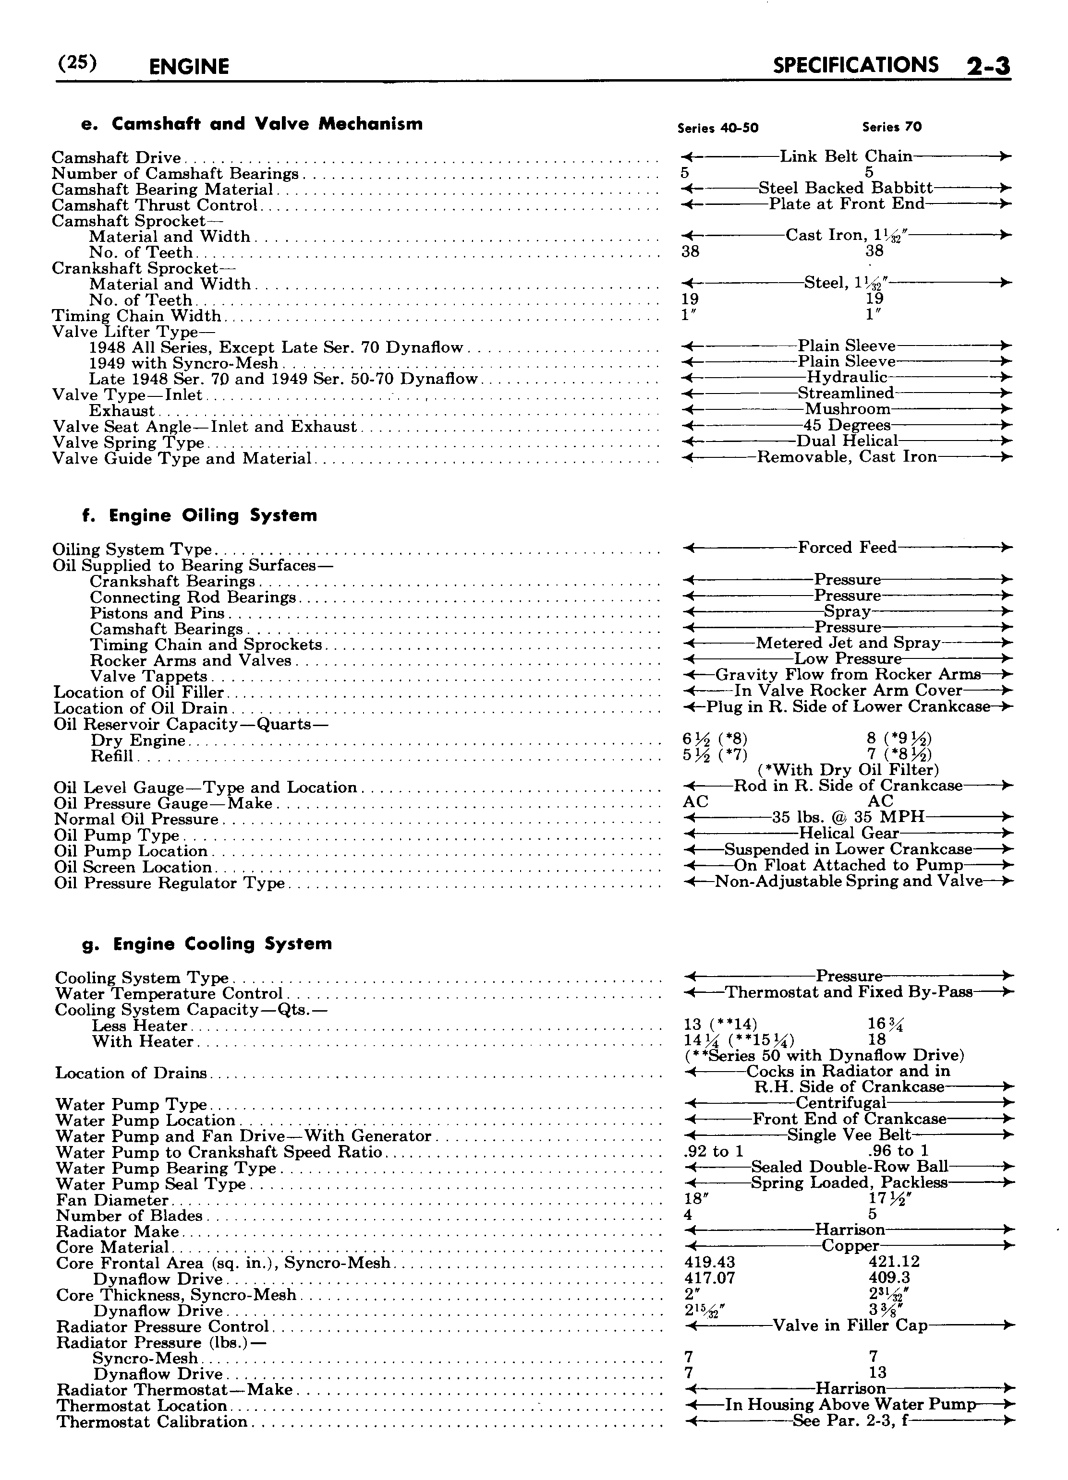 n_03 1948 Buick Shop Manual - Engine-003-003.jpg